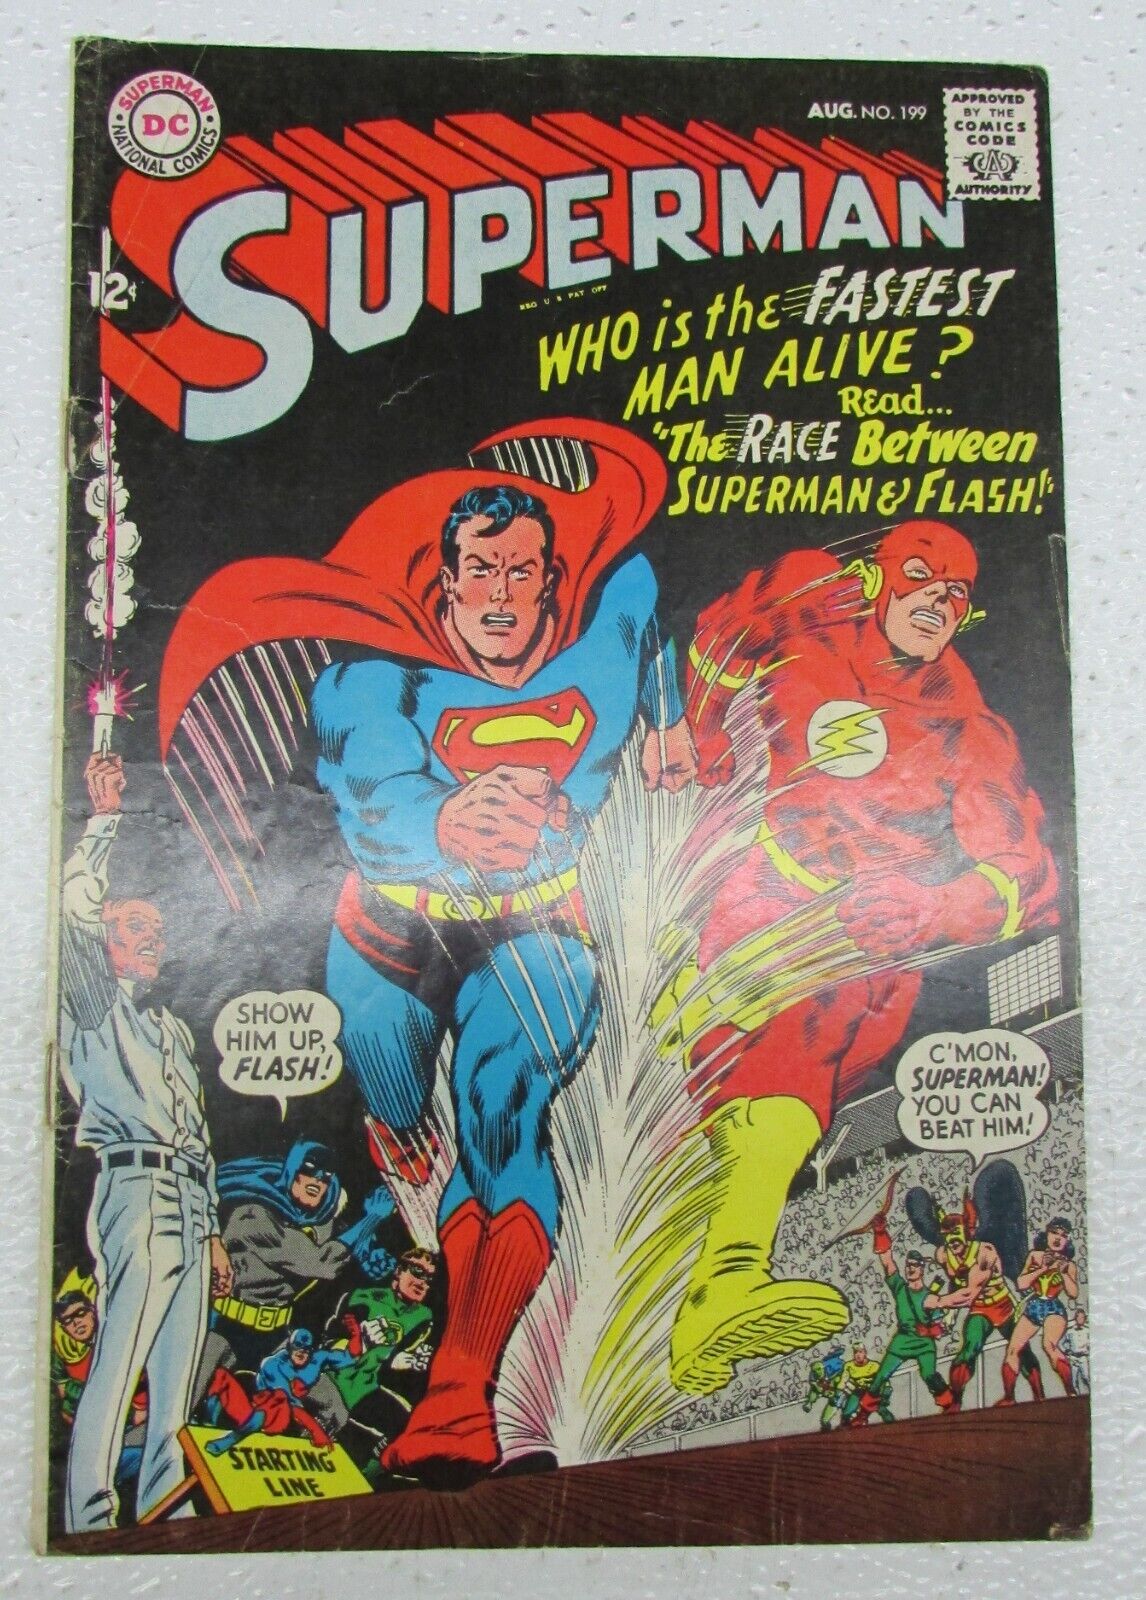 VINTAGE DC COMICS SUPERMAN #199 AUG 1967 COMIC BOOK VS THE FLASH RACE